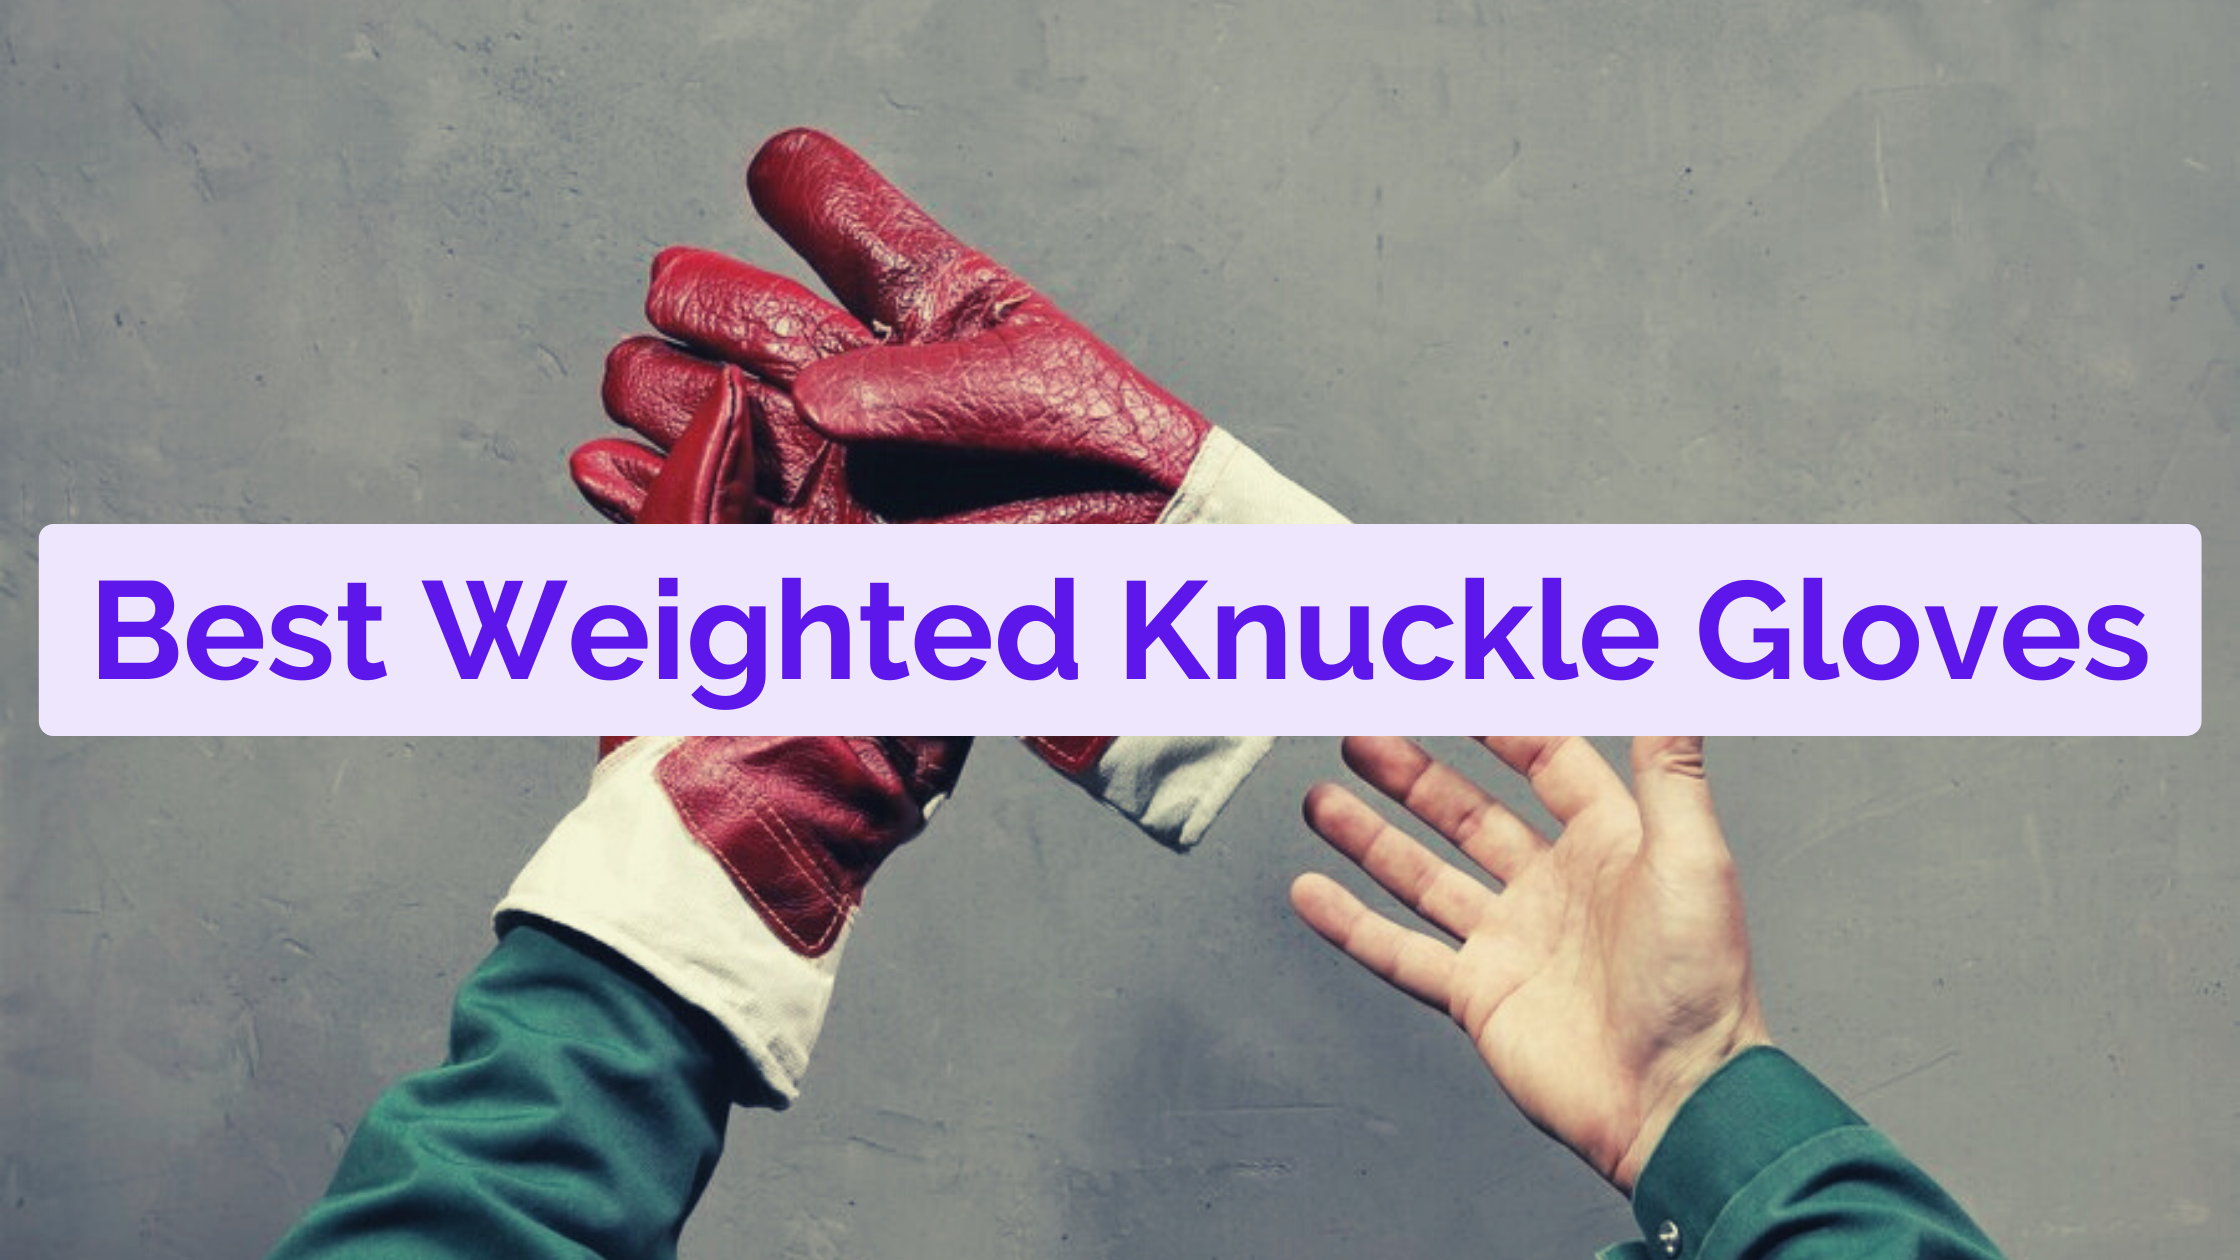 Best Weighted Knuckle Gloves